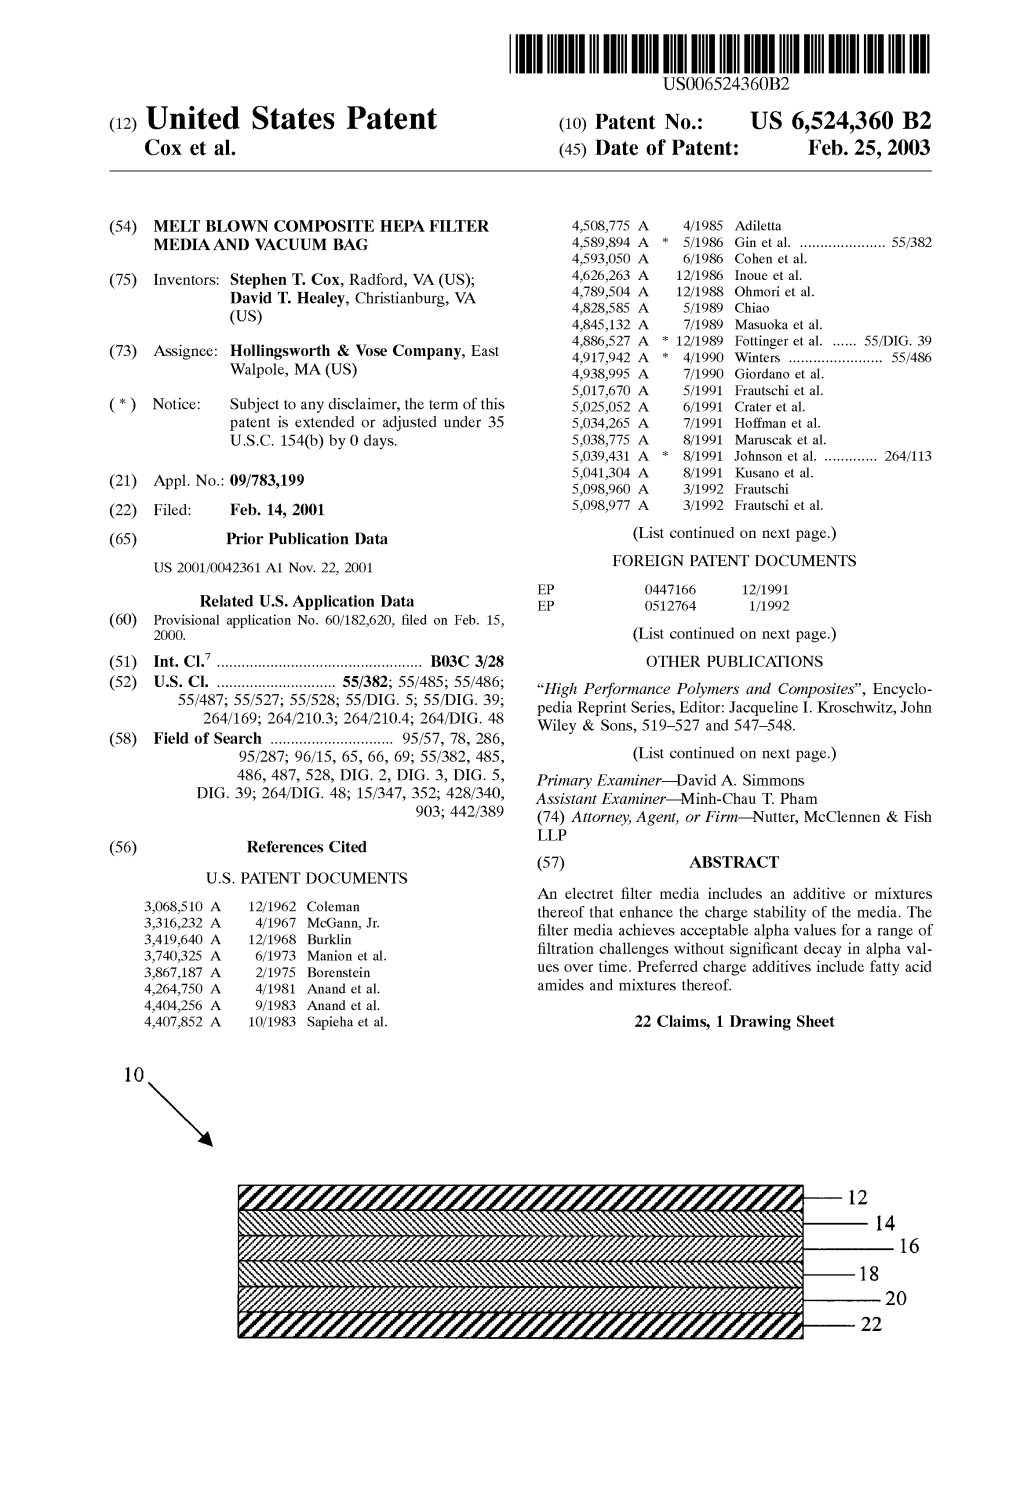 (12) United States Patent (10) Patent No.: US 6,524,360 B2 Cox Et Al